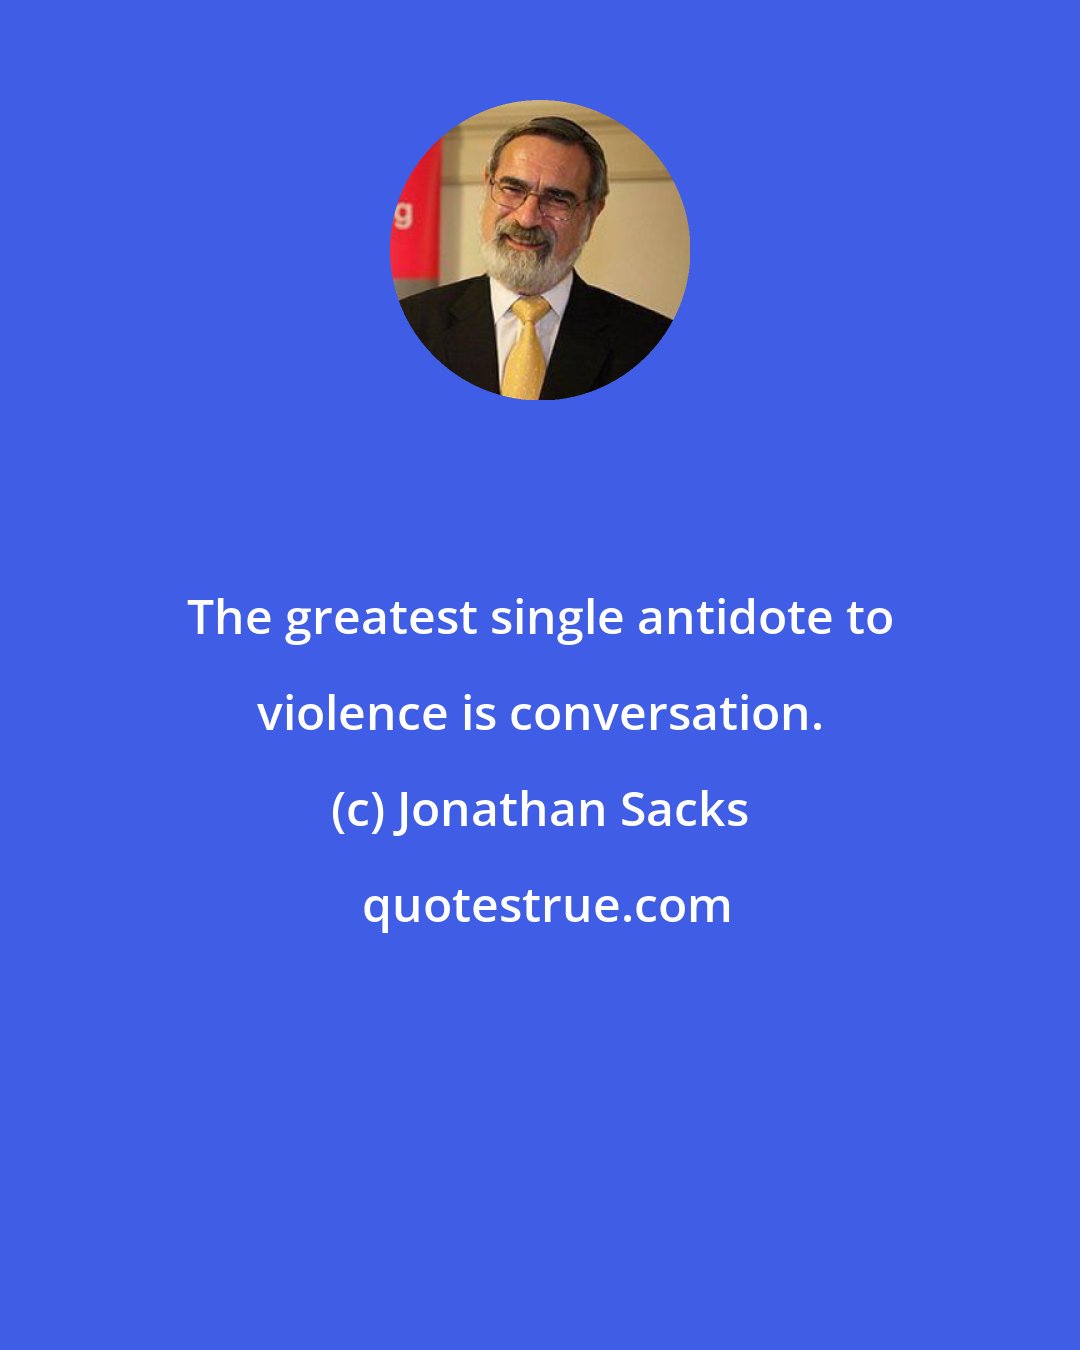 Jonathan Sacks: The greatest single antidote to violence is conversation.